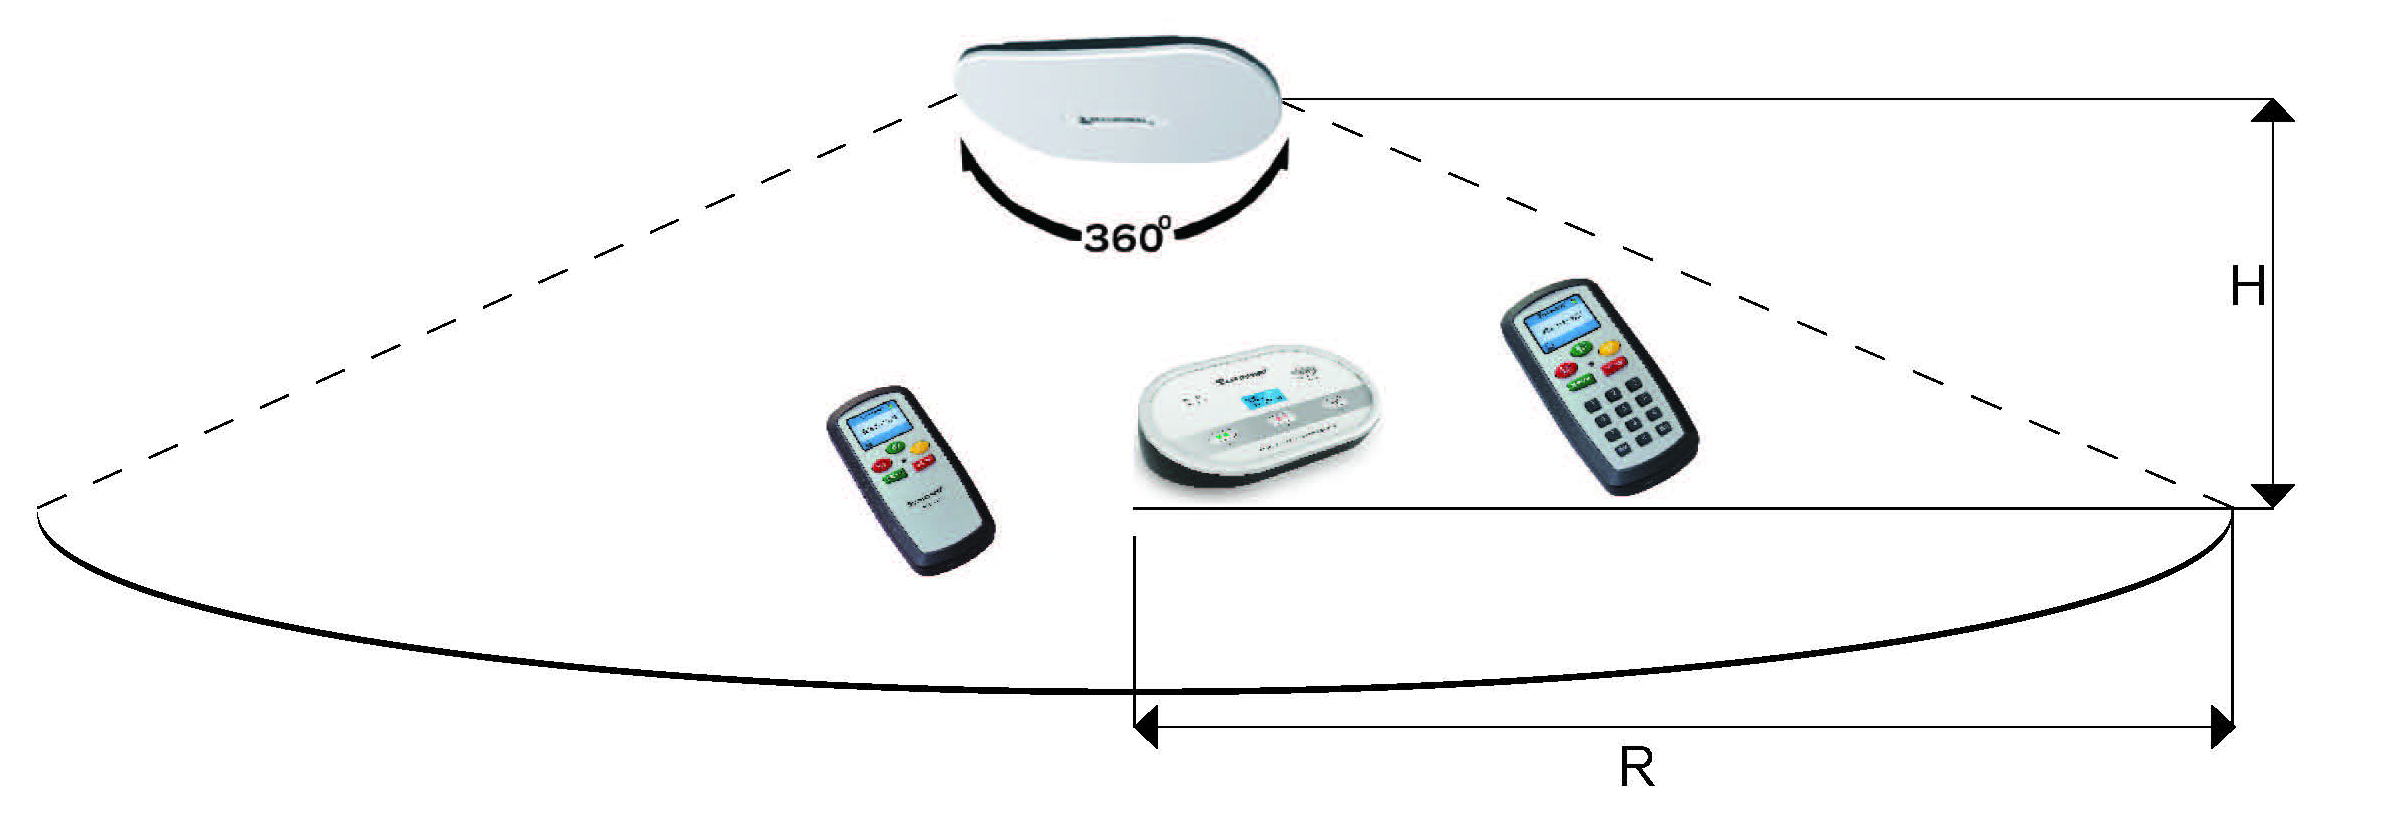 Wireless voting system-Full digital wireless 3 keys voting RX-D2813